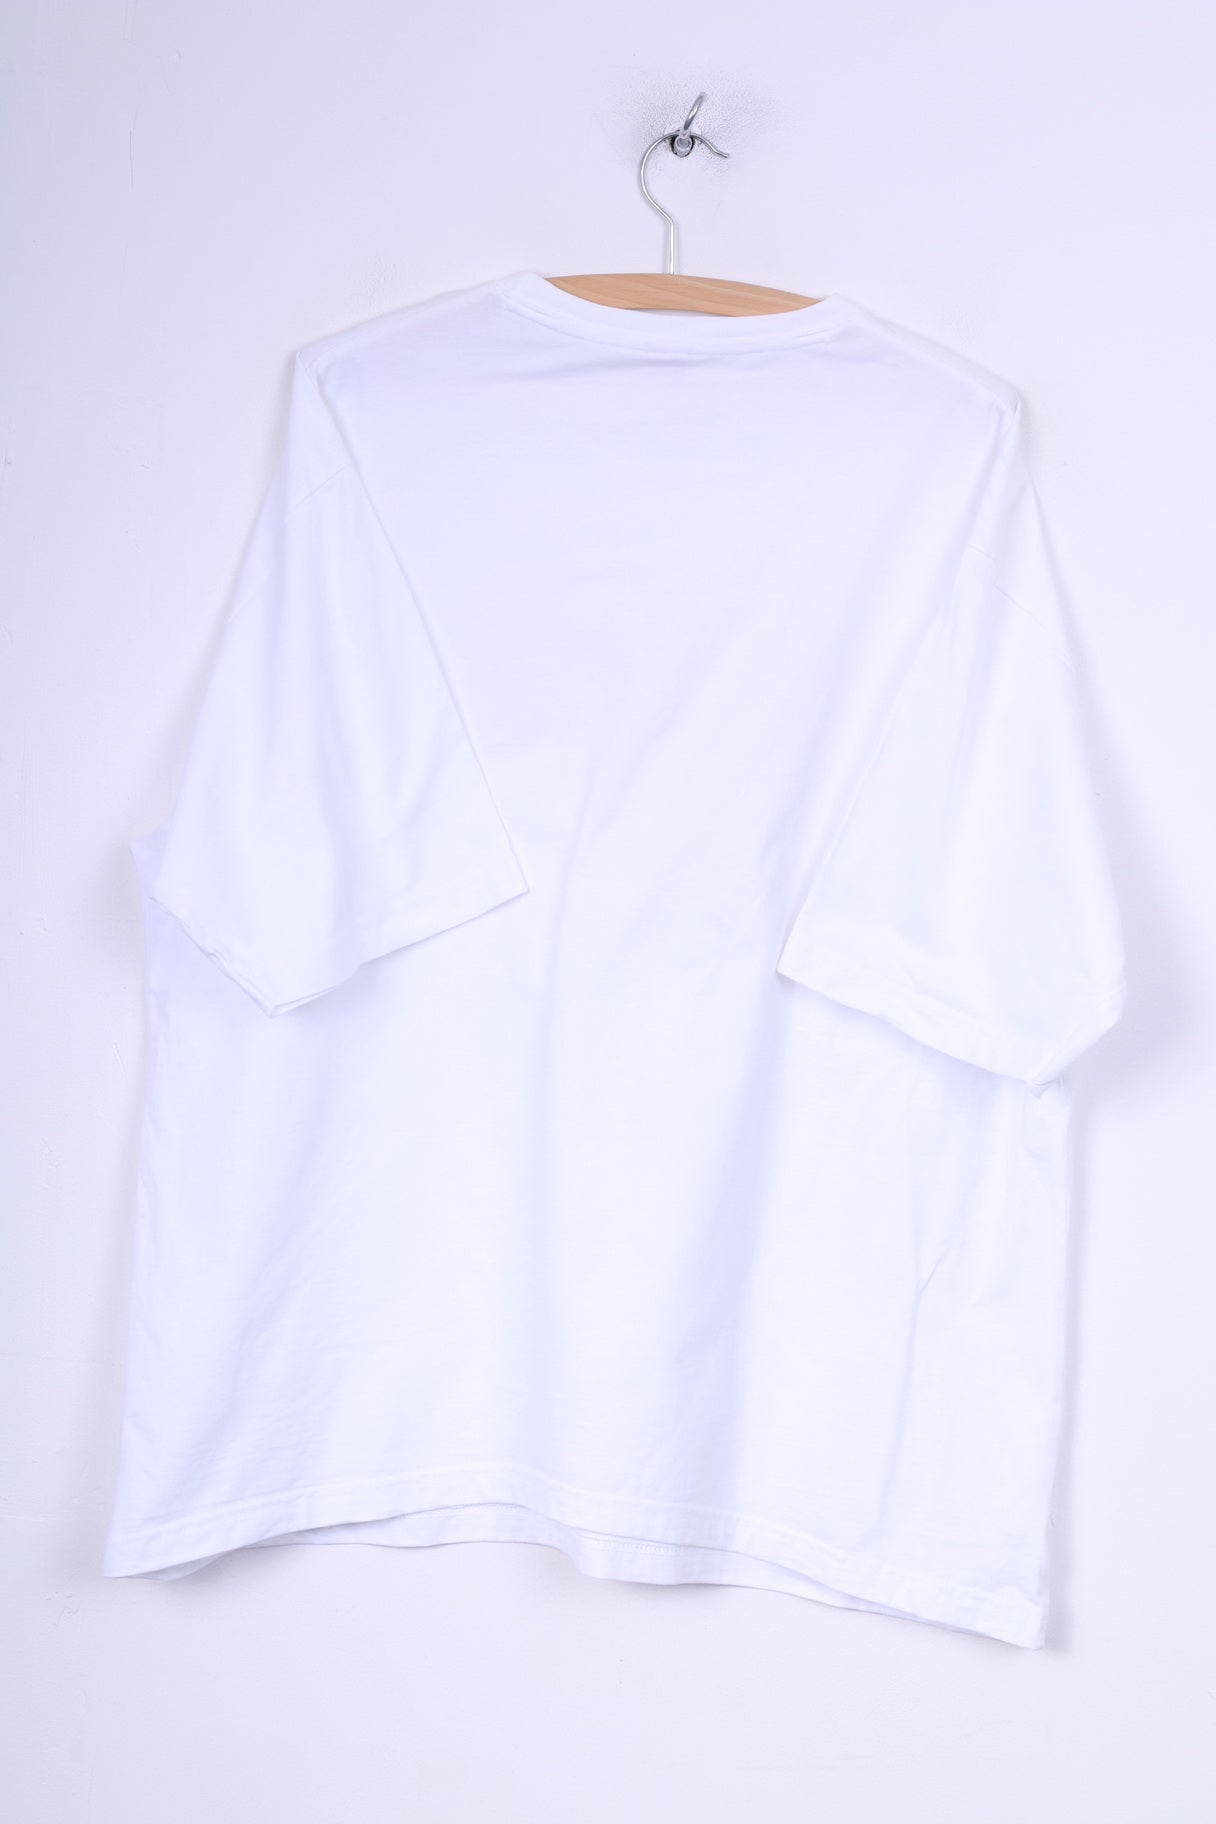 Comic Relief RND 05 Mens XL T-Shirt Graphic White Cotton Established 1985 Summer